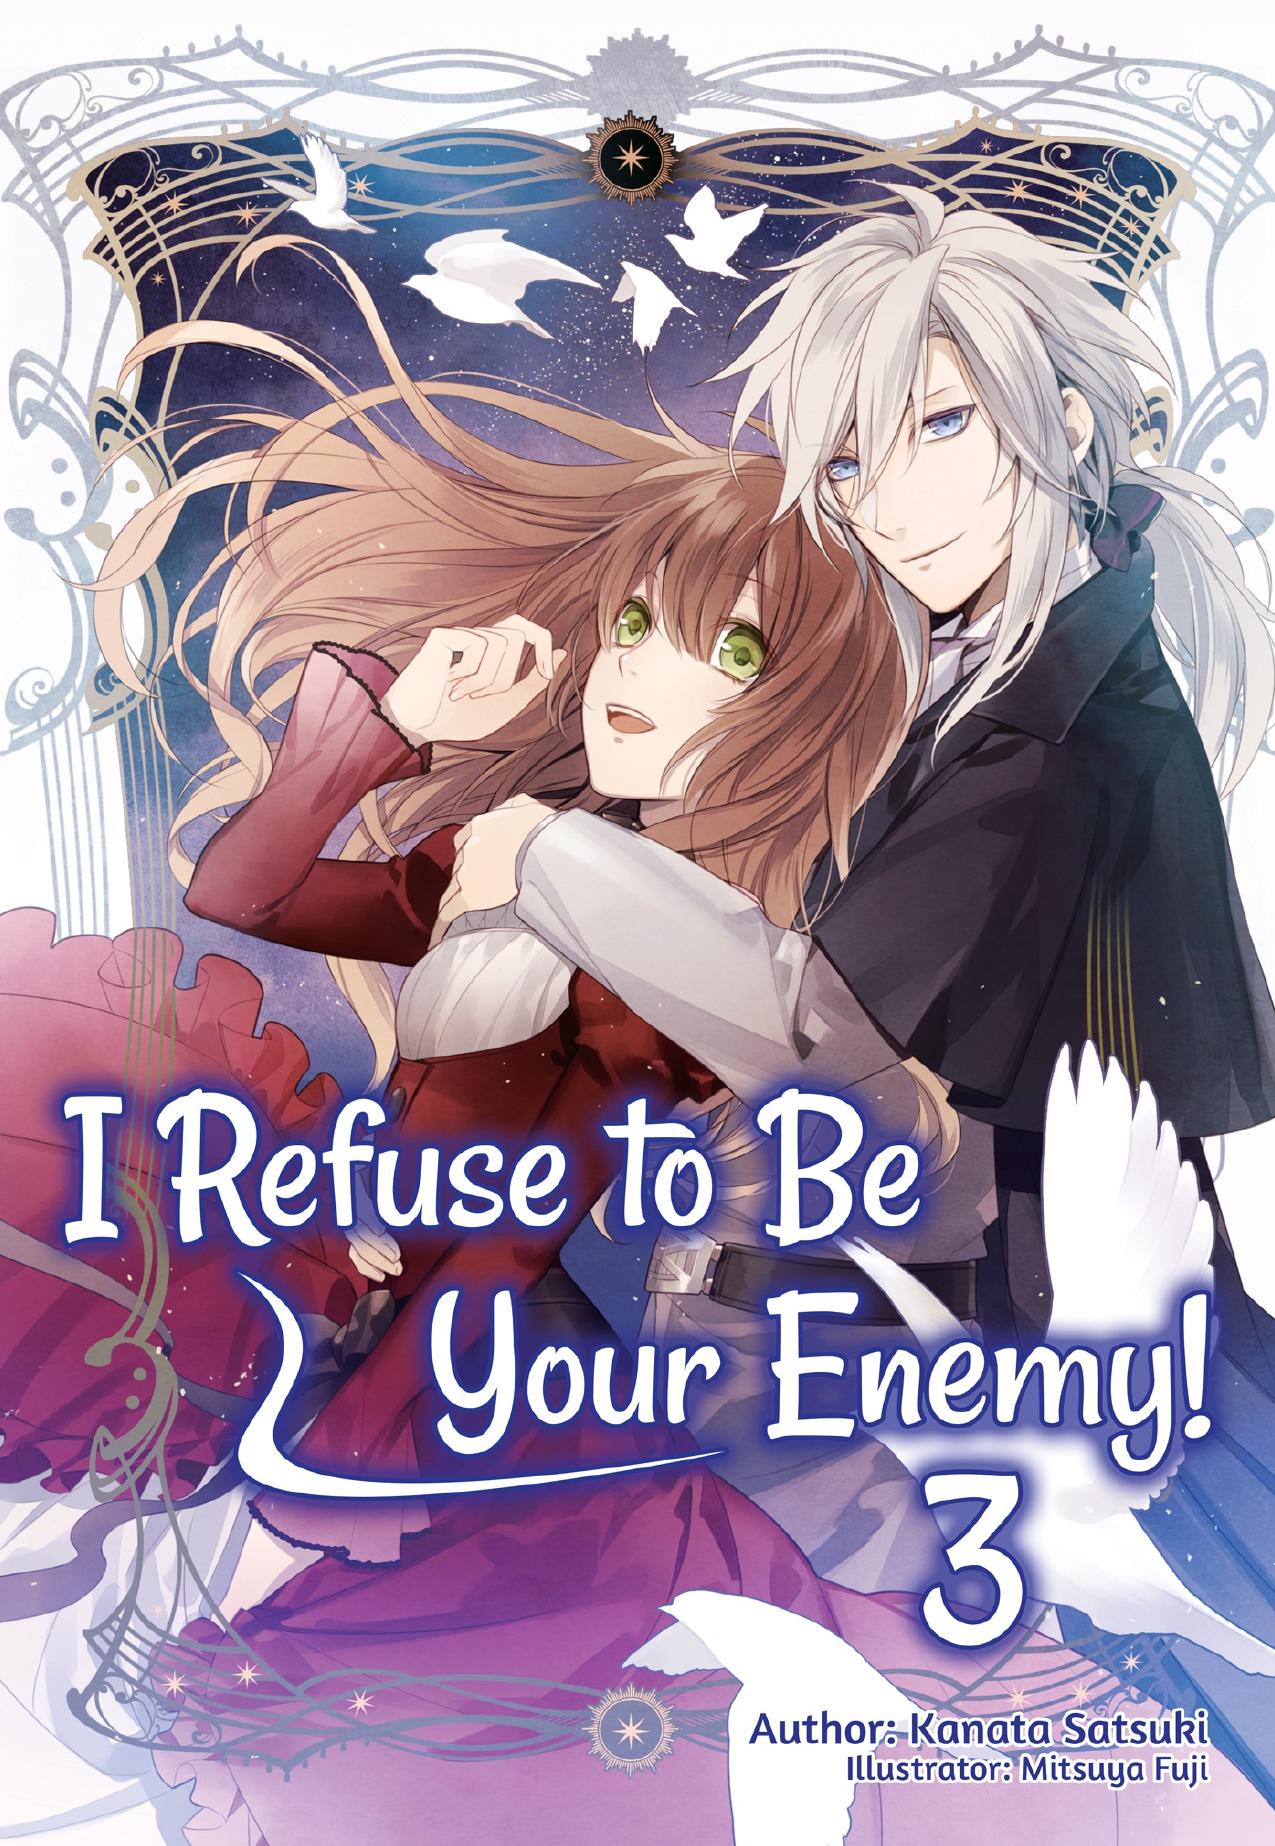 I Refuse to Be Your Enemy! Volume 3 by Kanata Satsuki